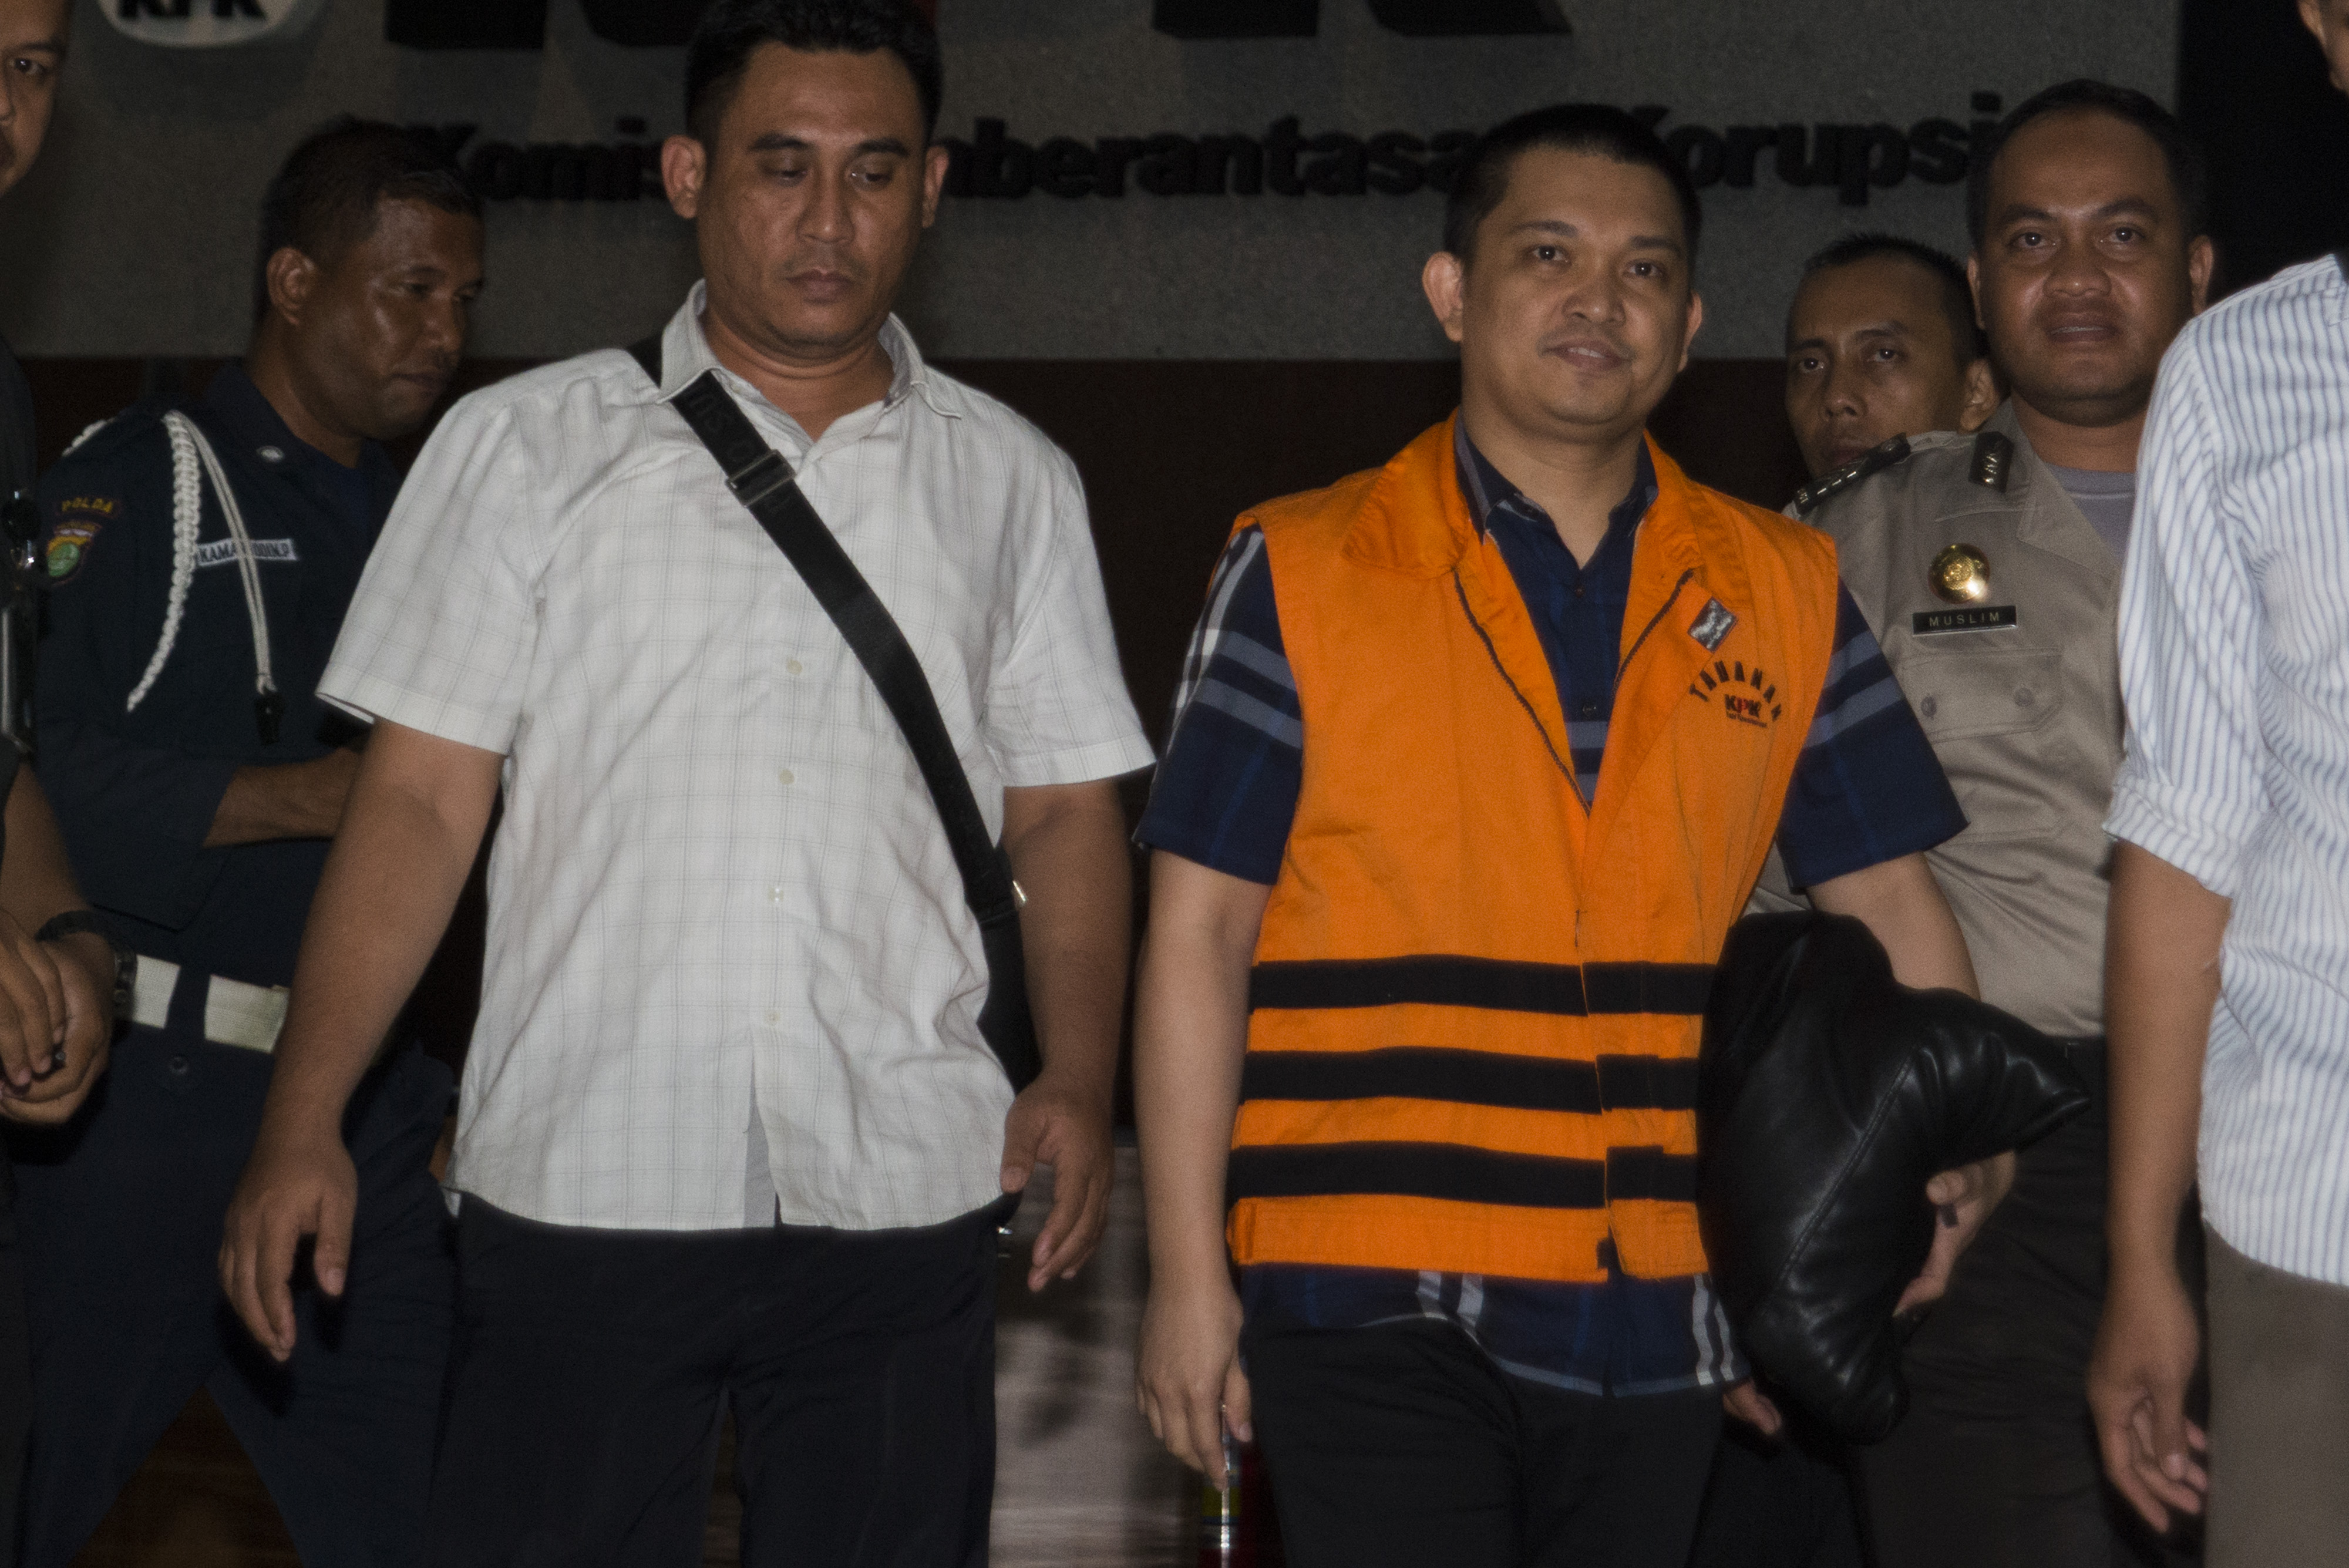 DITAHAN. Anggota DPR Komisi XI dari Fraksi Partai Golkar Aditya Moha (ketiga kiri) berjalan keluar menggunakan rompi tahanan usai diperiksa di gedung KPK, Jakarta, Minggu, 8 Oktober dini hari. Foto oleh Rosa Panggabean/ANTARA 